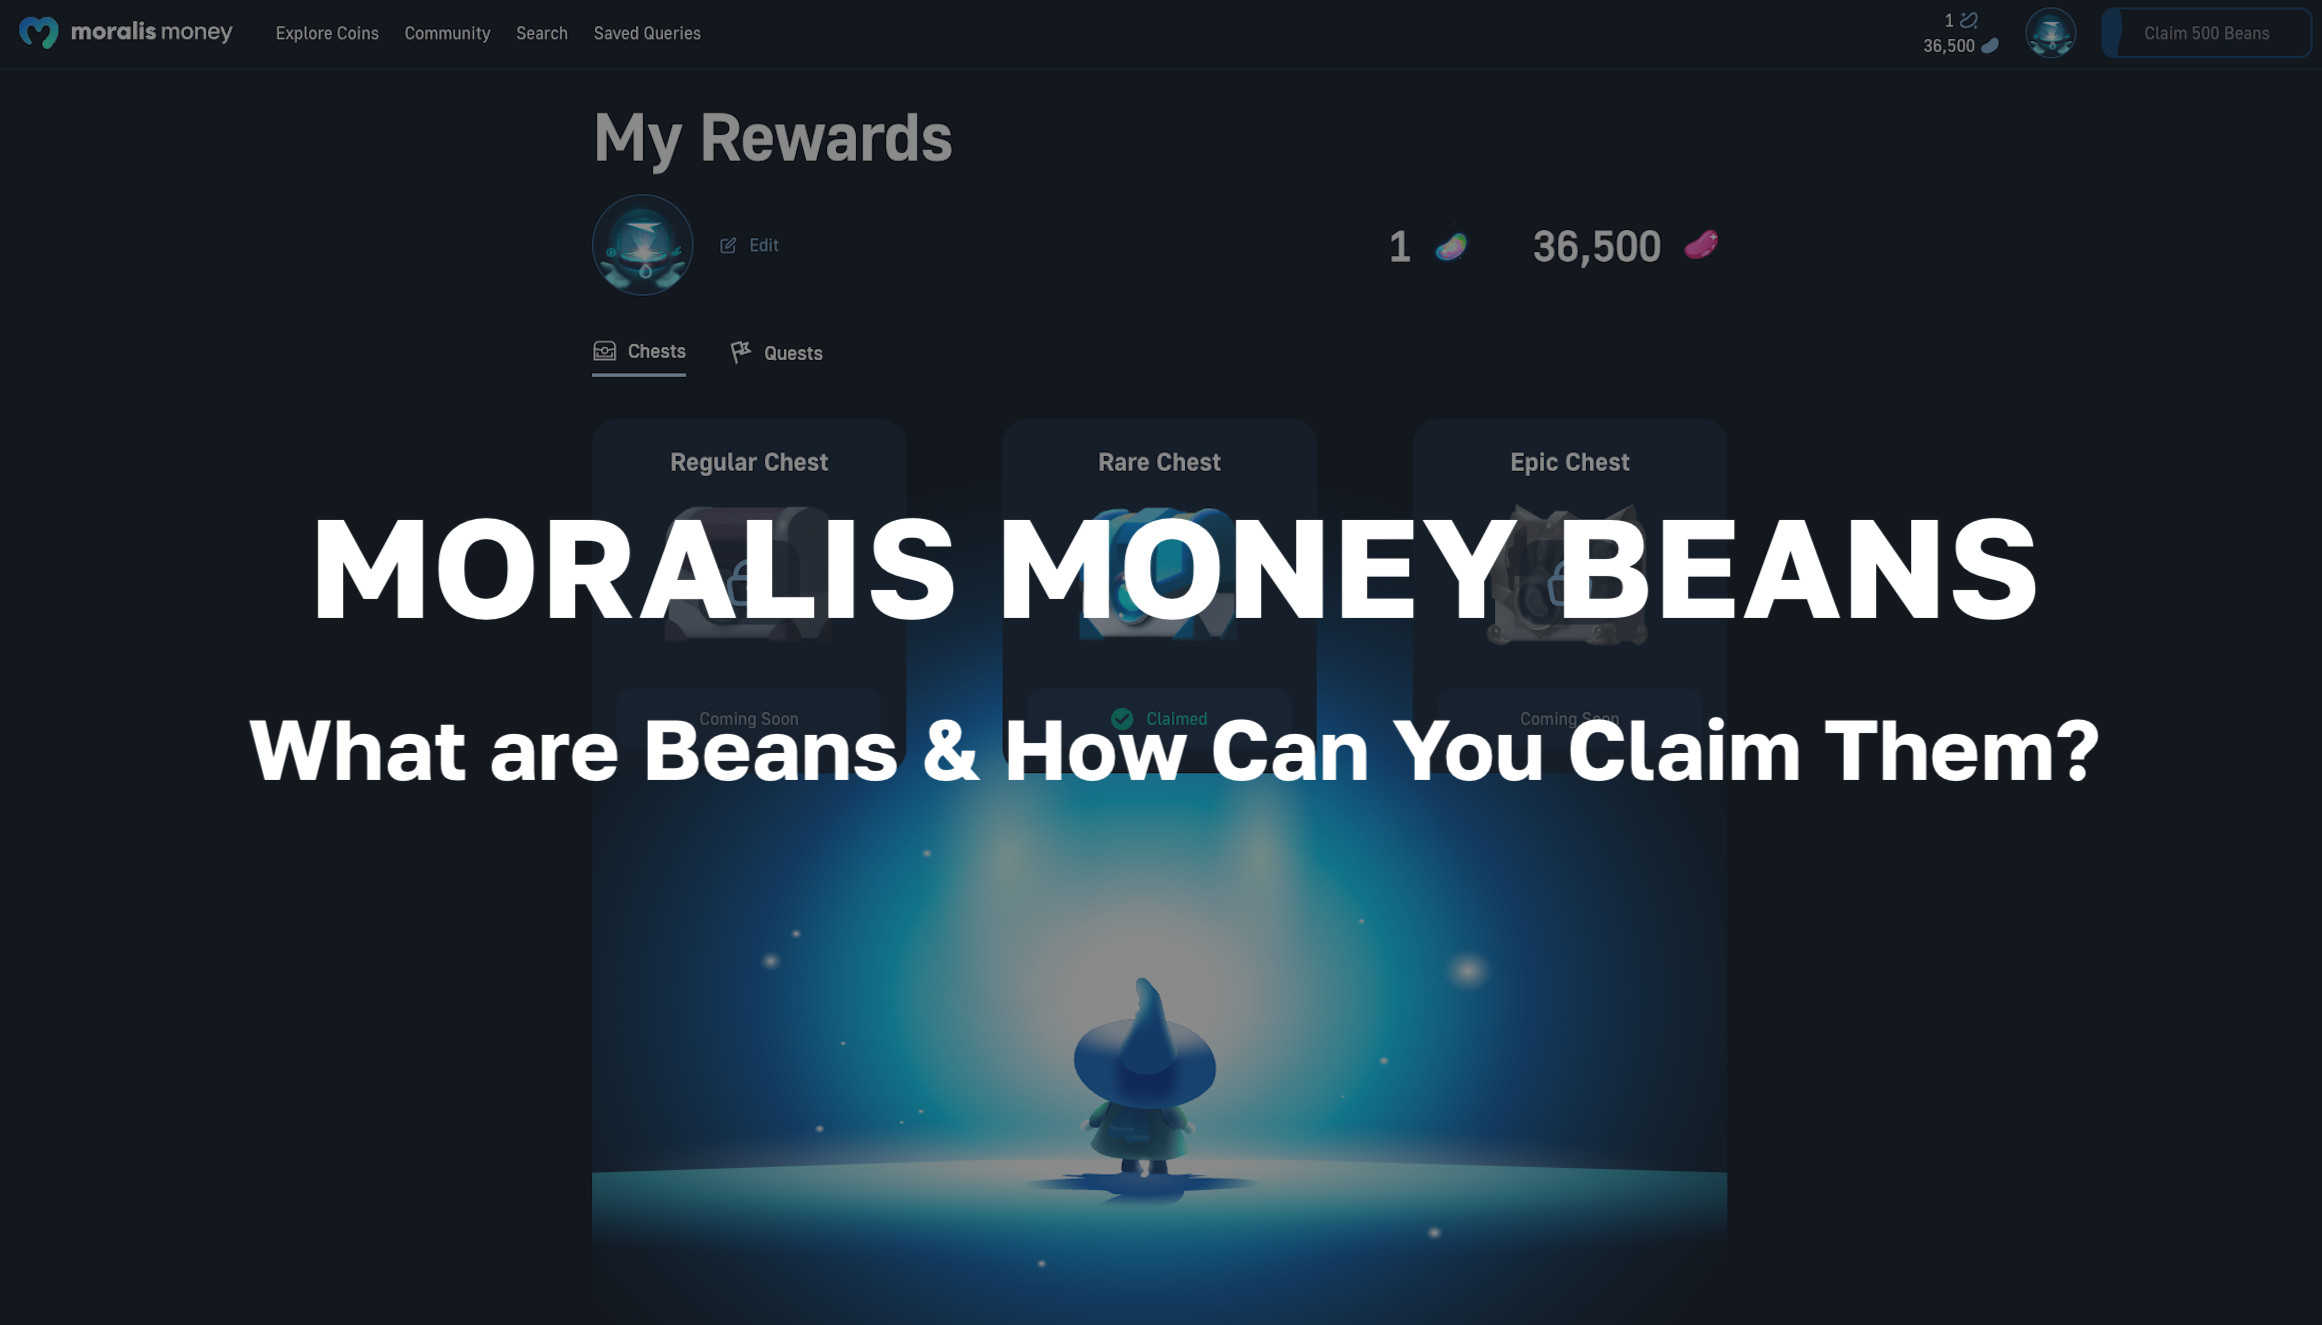 Moralis Money Beans Explained